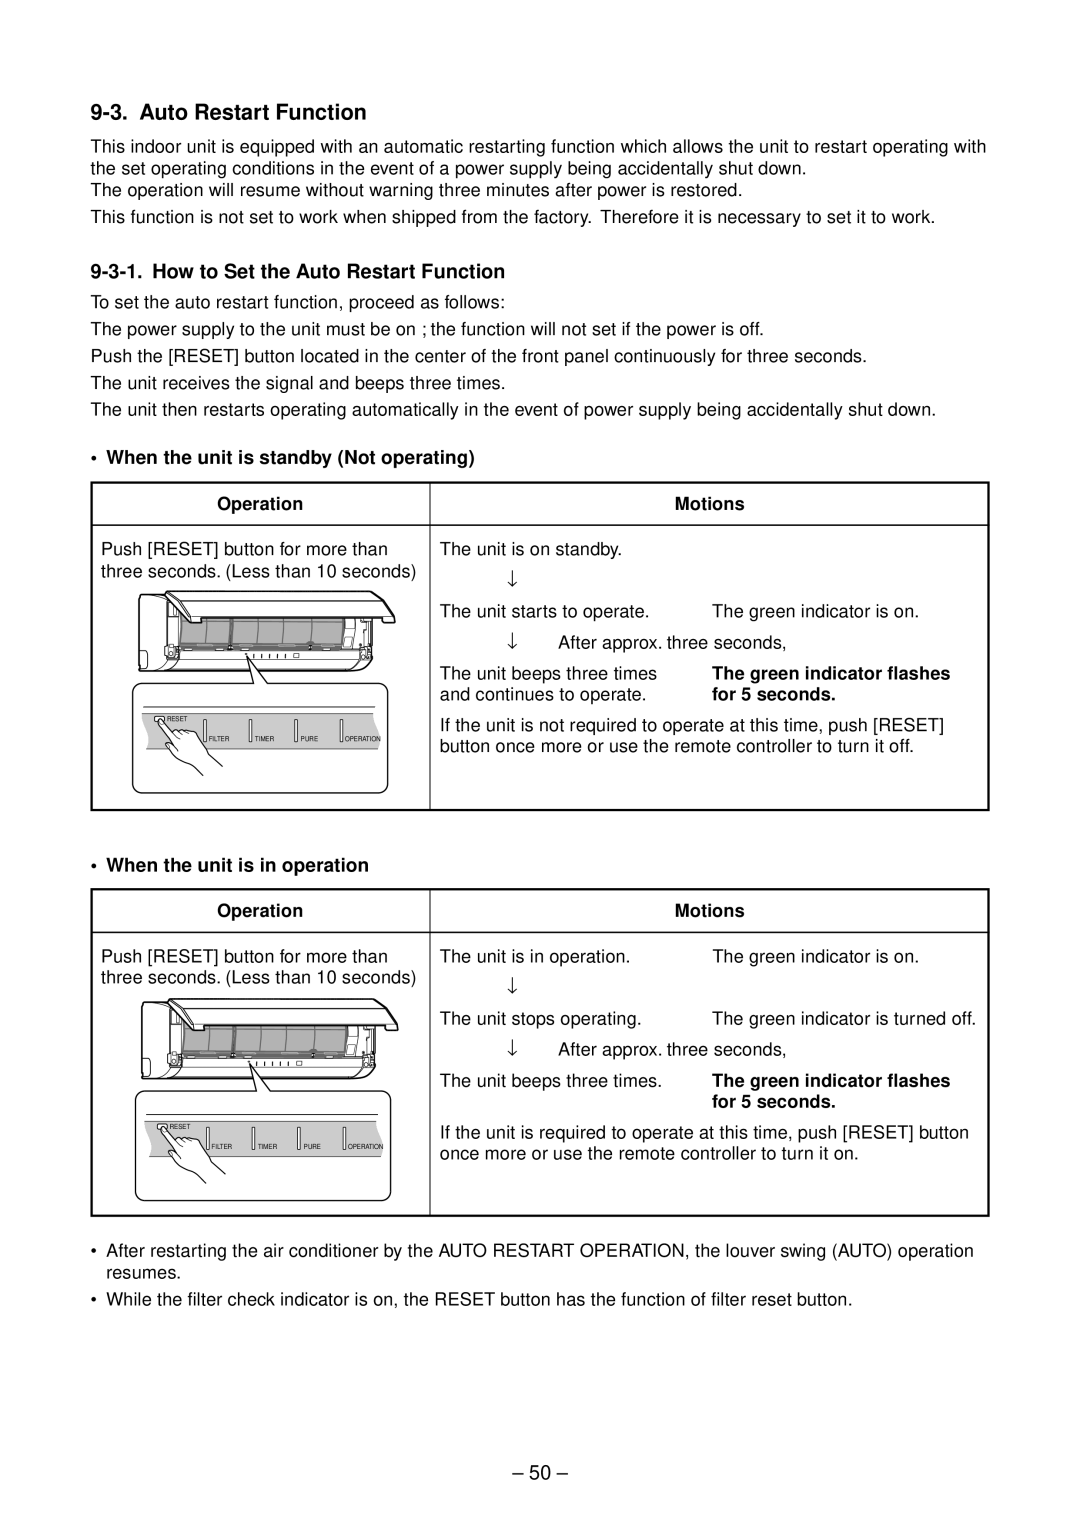 Toshiba RAS-10SAVP-E, RAS-B13SKVP-E How to Set the Auto Restart Function, 50, • When the unit is standby Not operating 